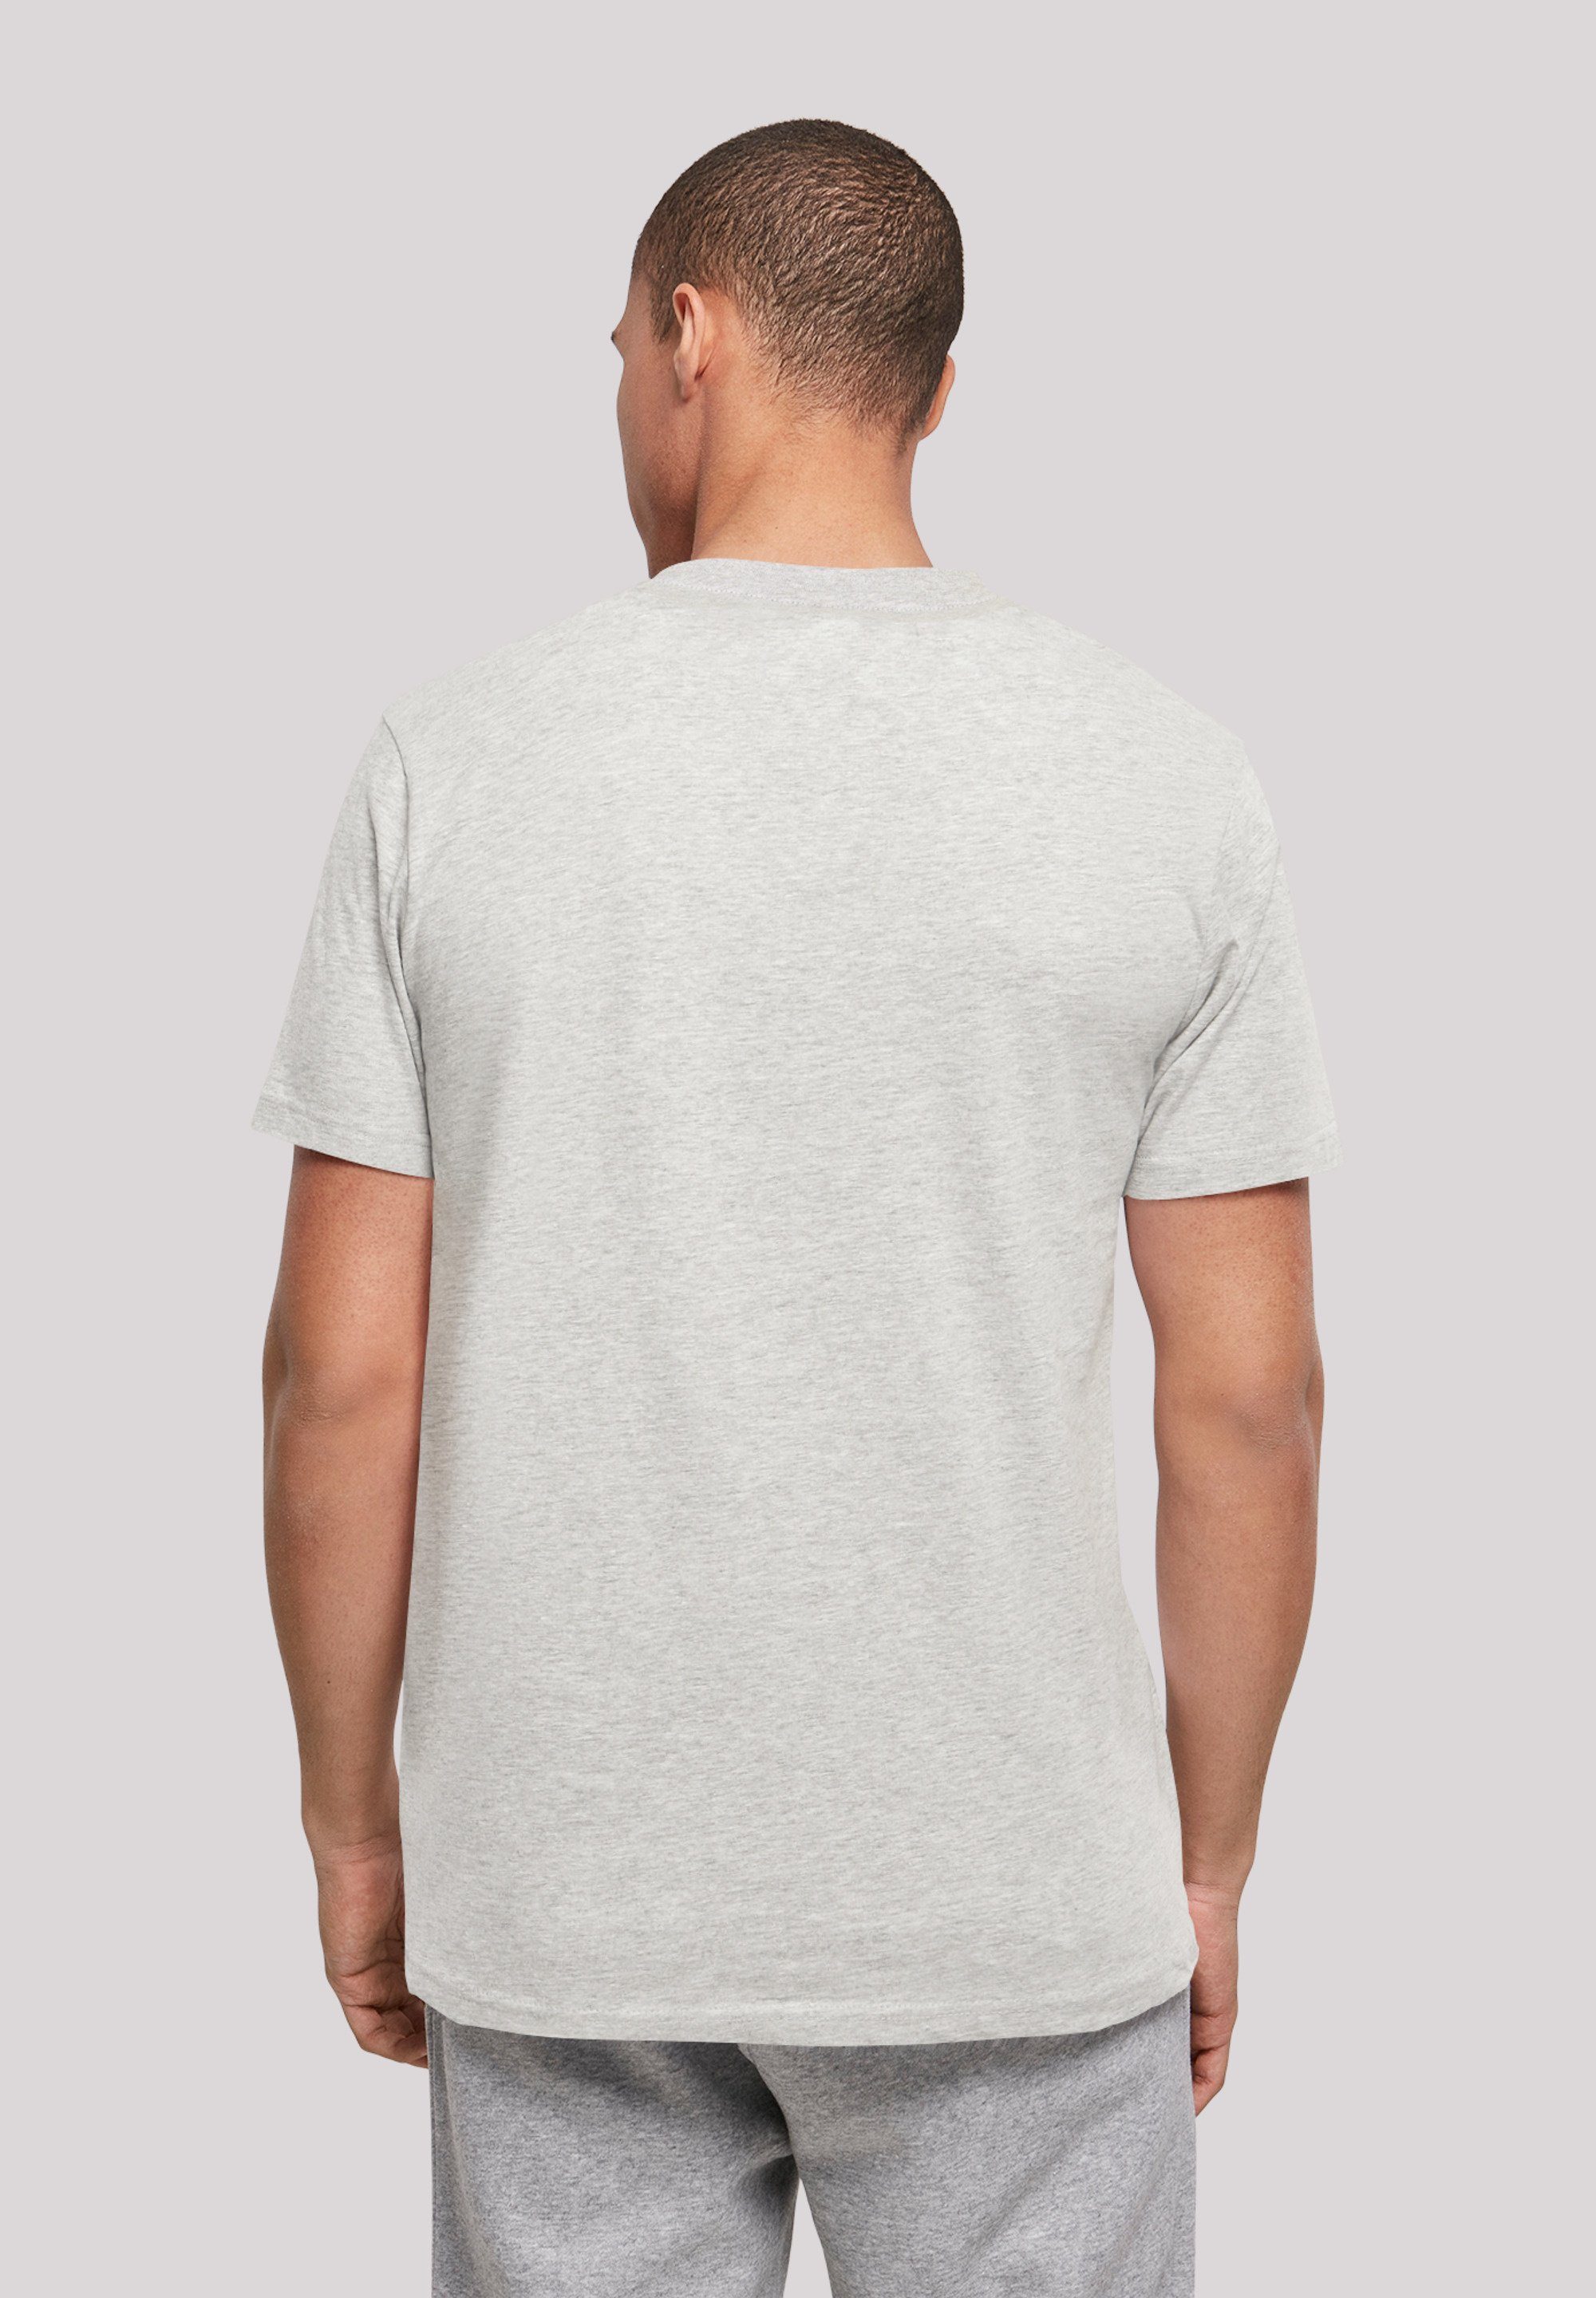 grey F4NT4STIC Cat heather TEE Print Wizard T-Shirt UNISEX